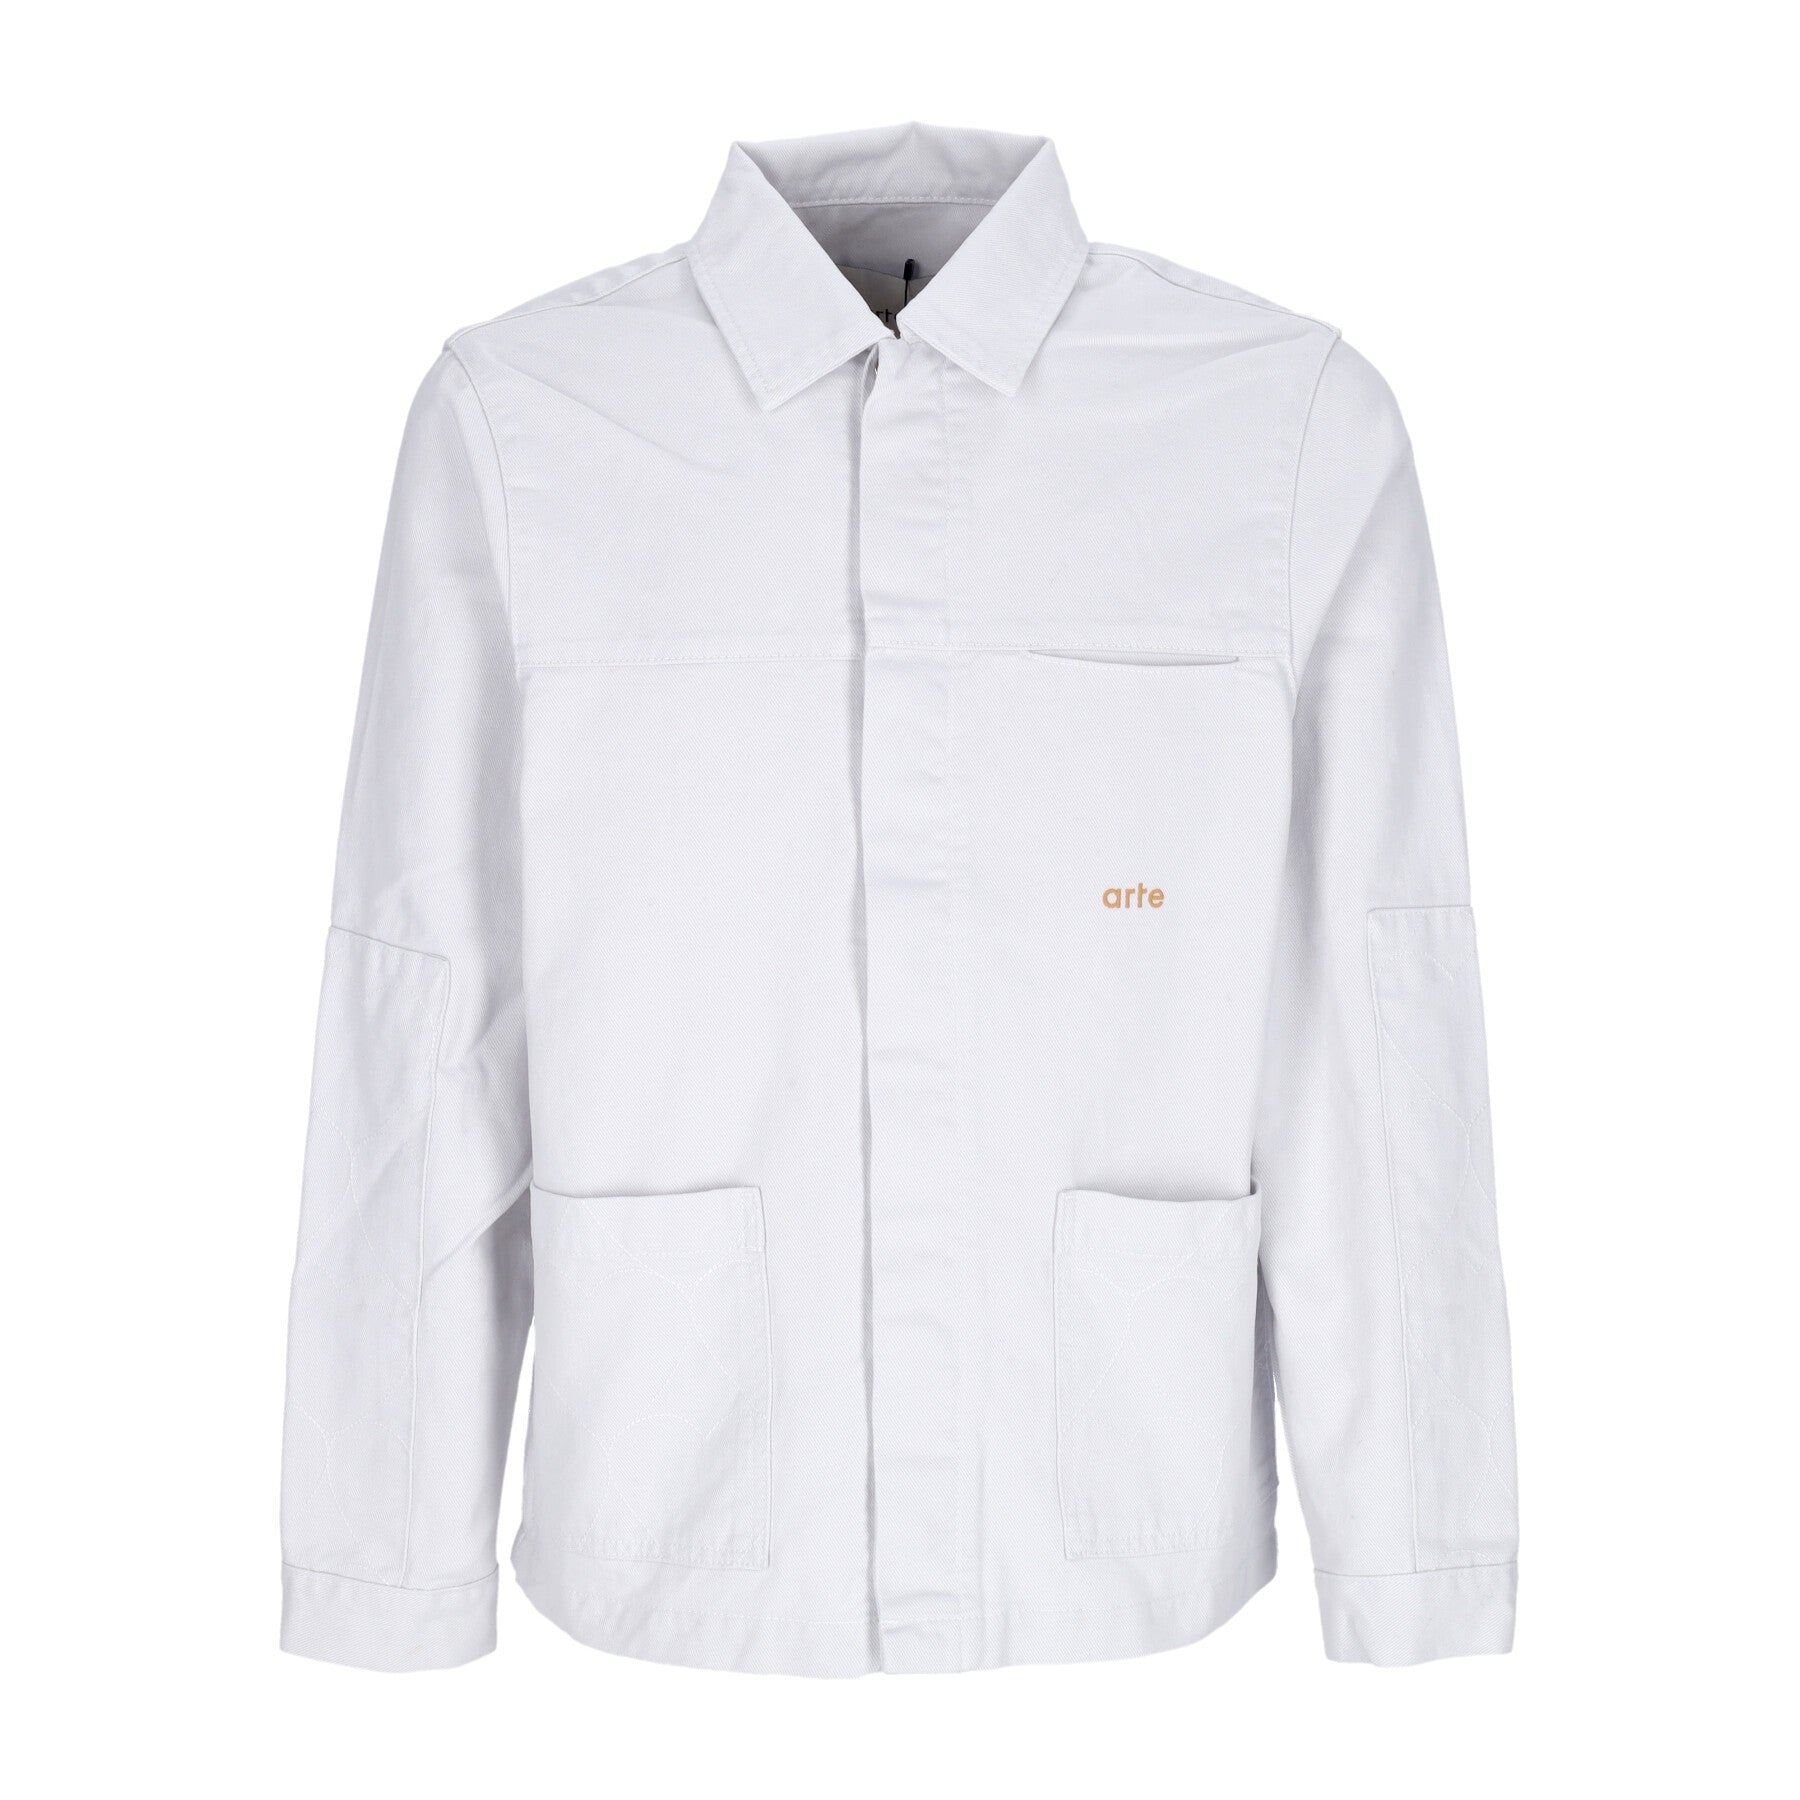 Arte, Camicia Manica Lunga Uomo Jackson Heart Workwear Jacket, Light Grey